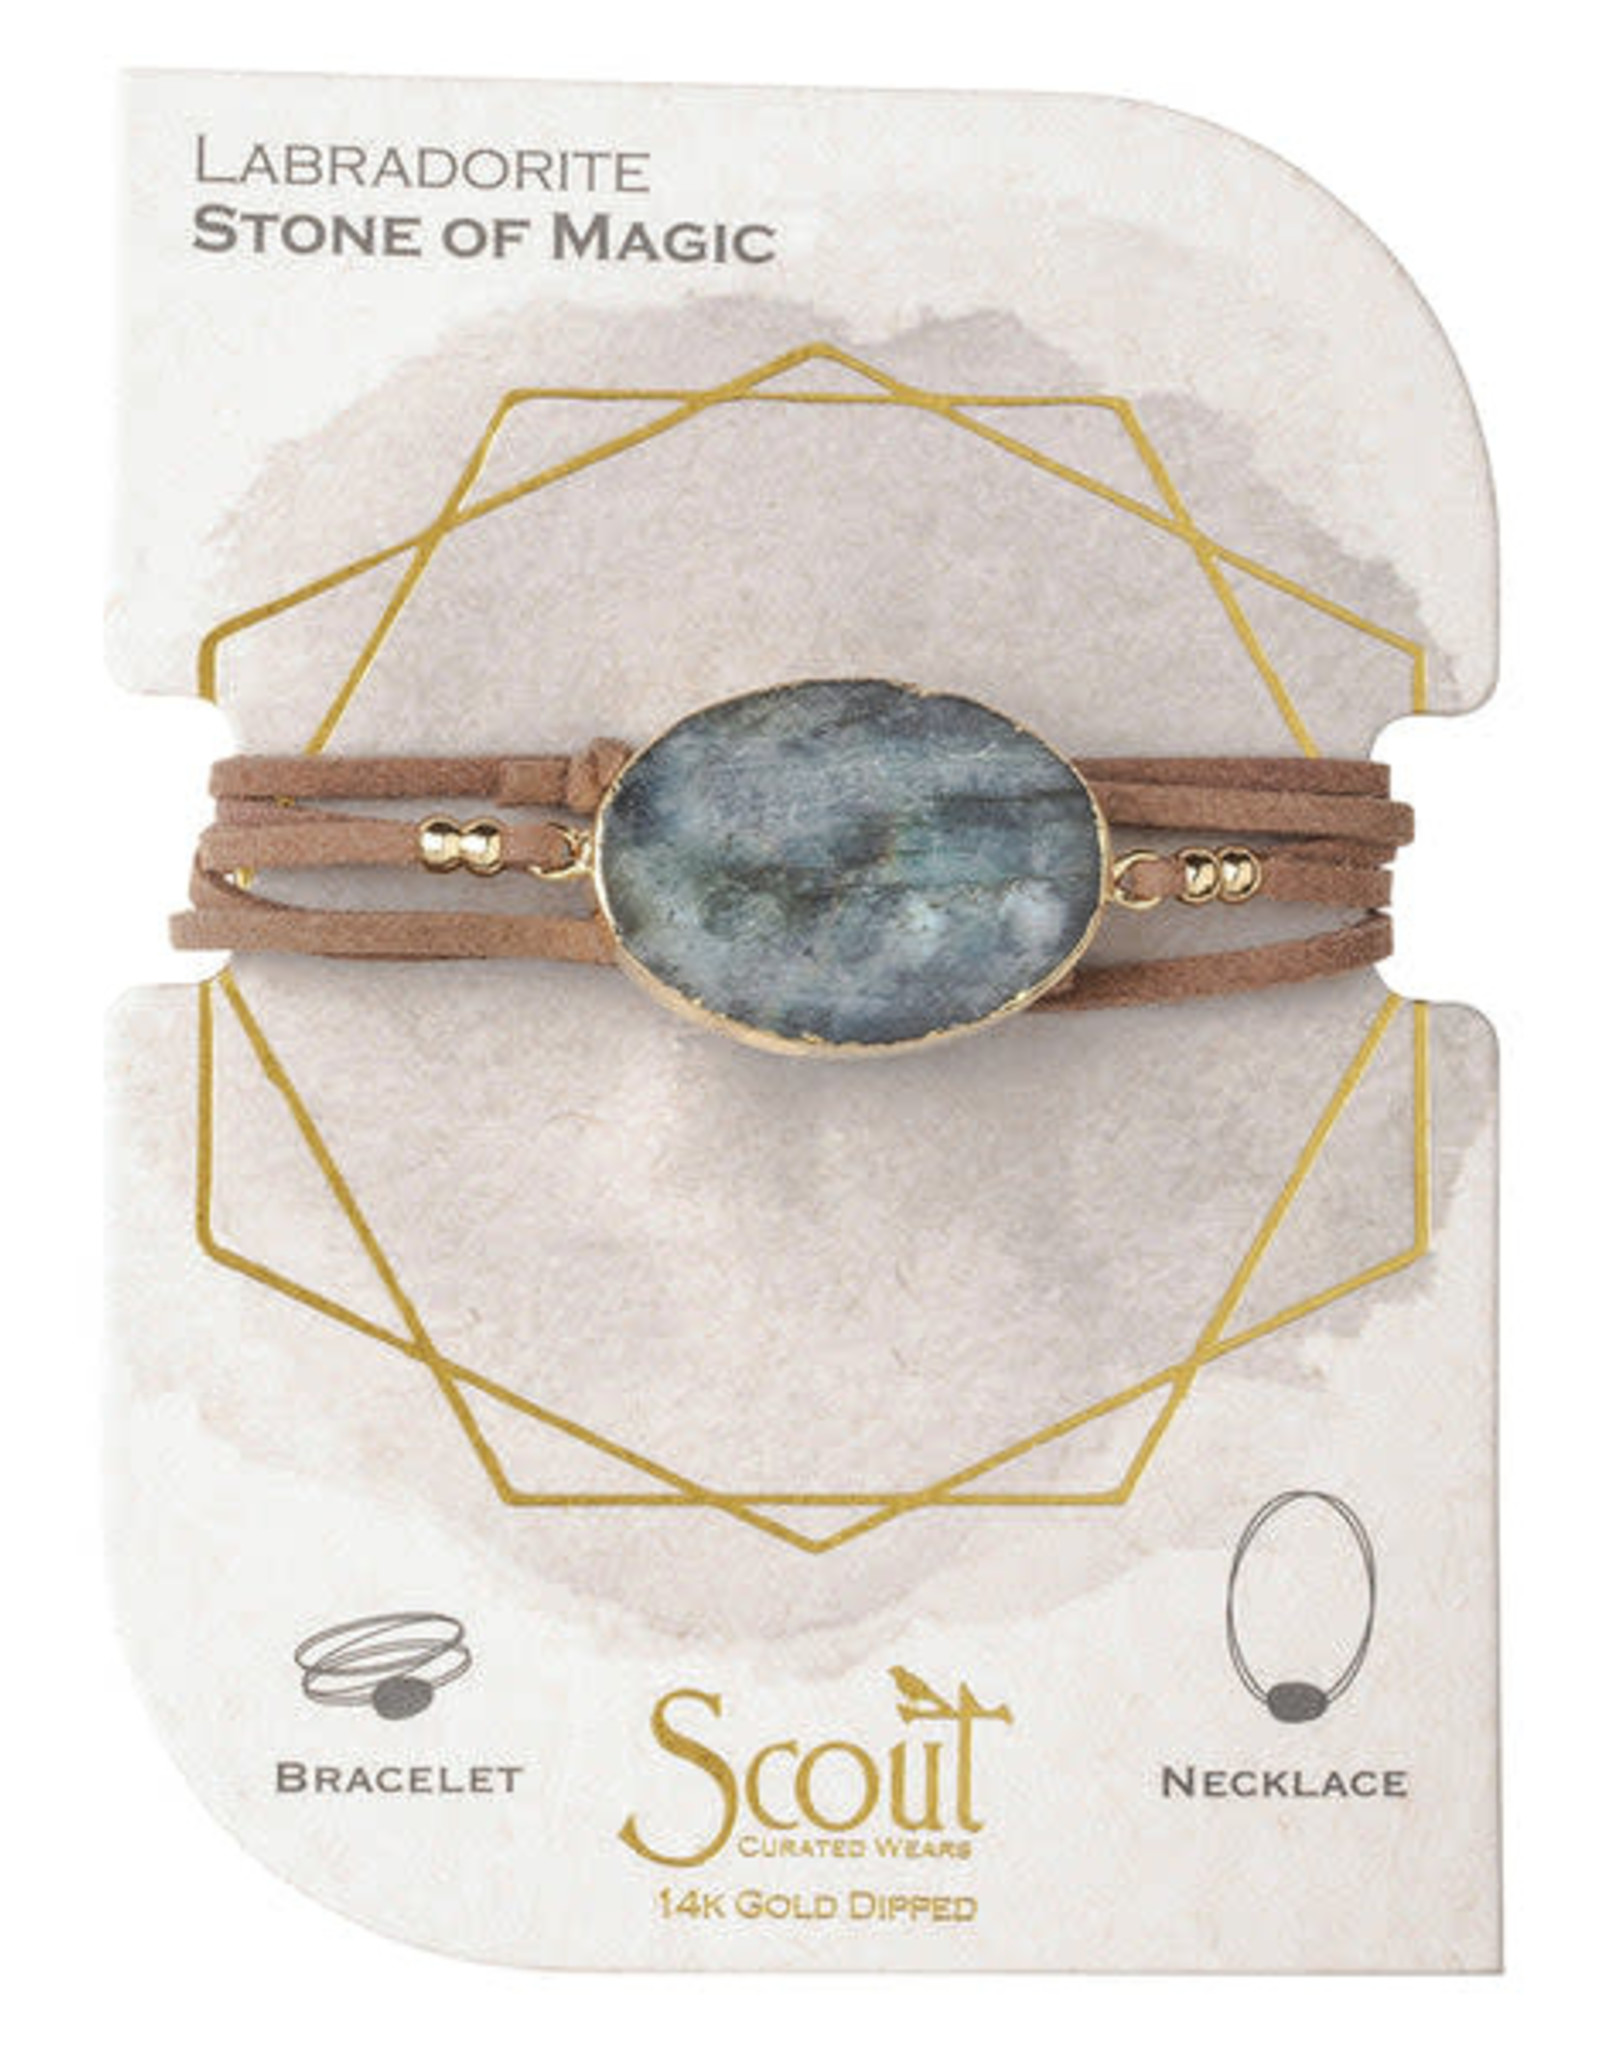 Scout Suede Stone Wrap Labradorite/Gold